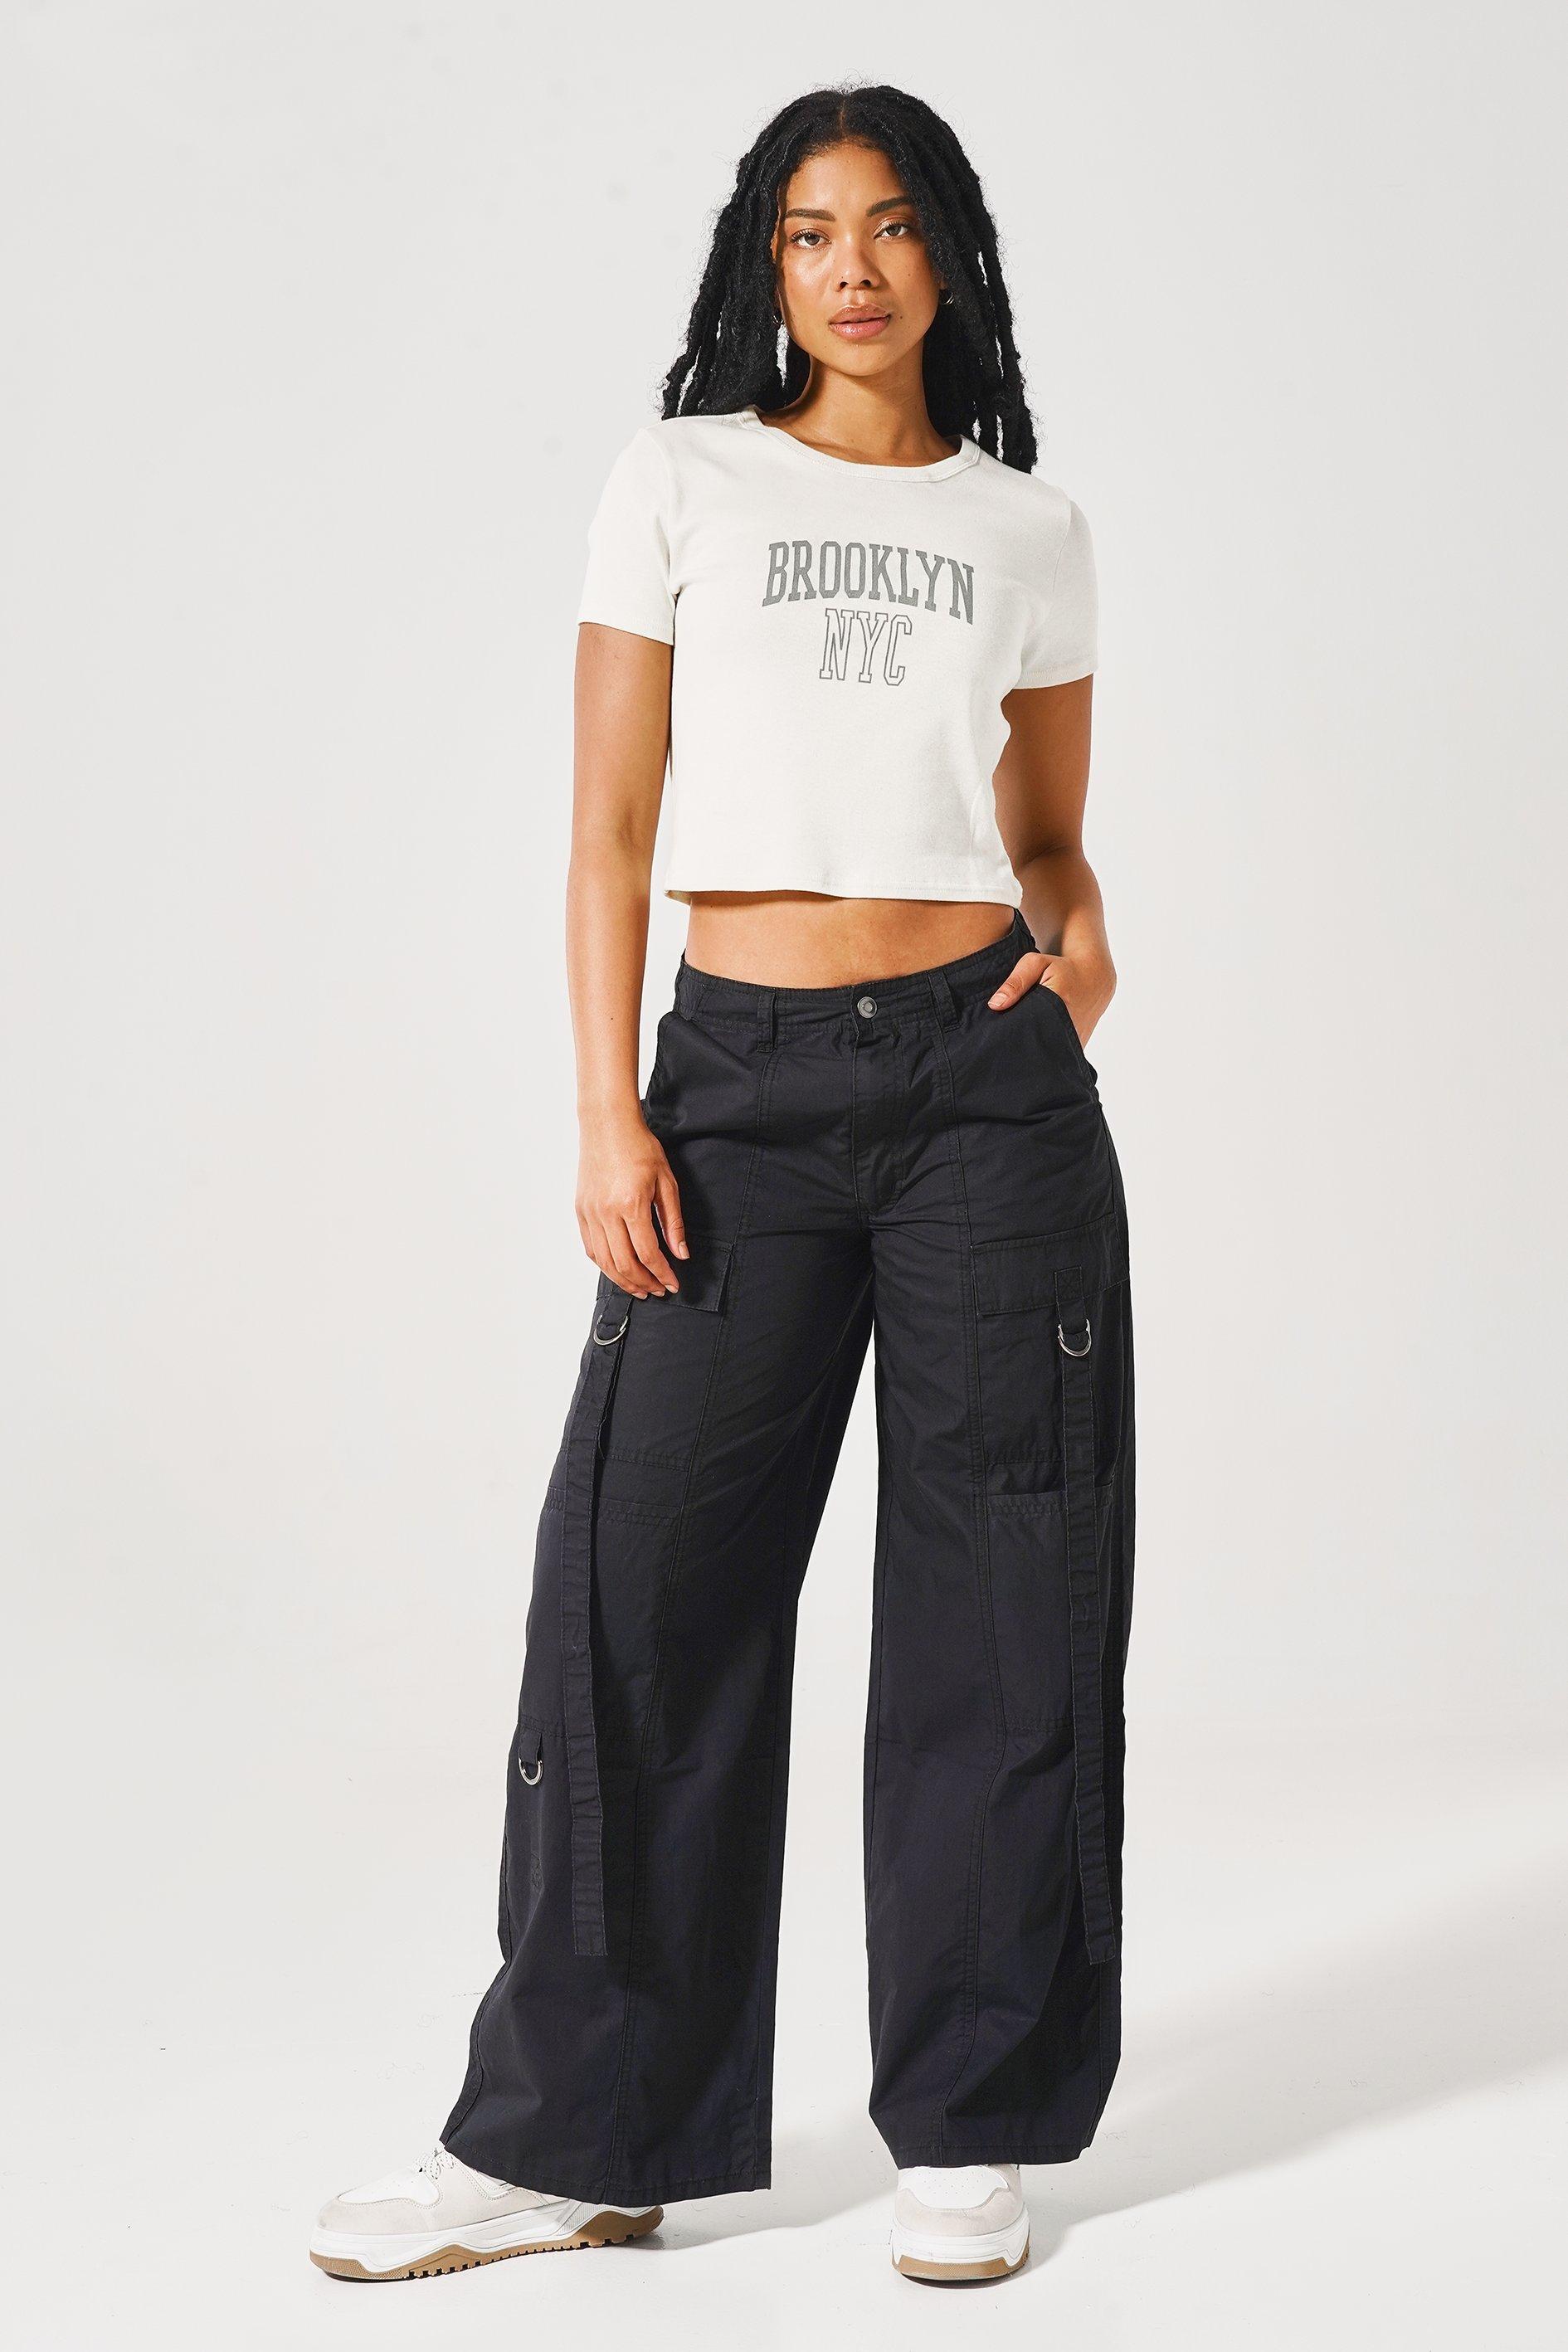 Brandy Print Flare Pants - Multi  Printed flare pants, Flare pants boho, Flared  pants outfit